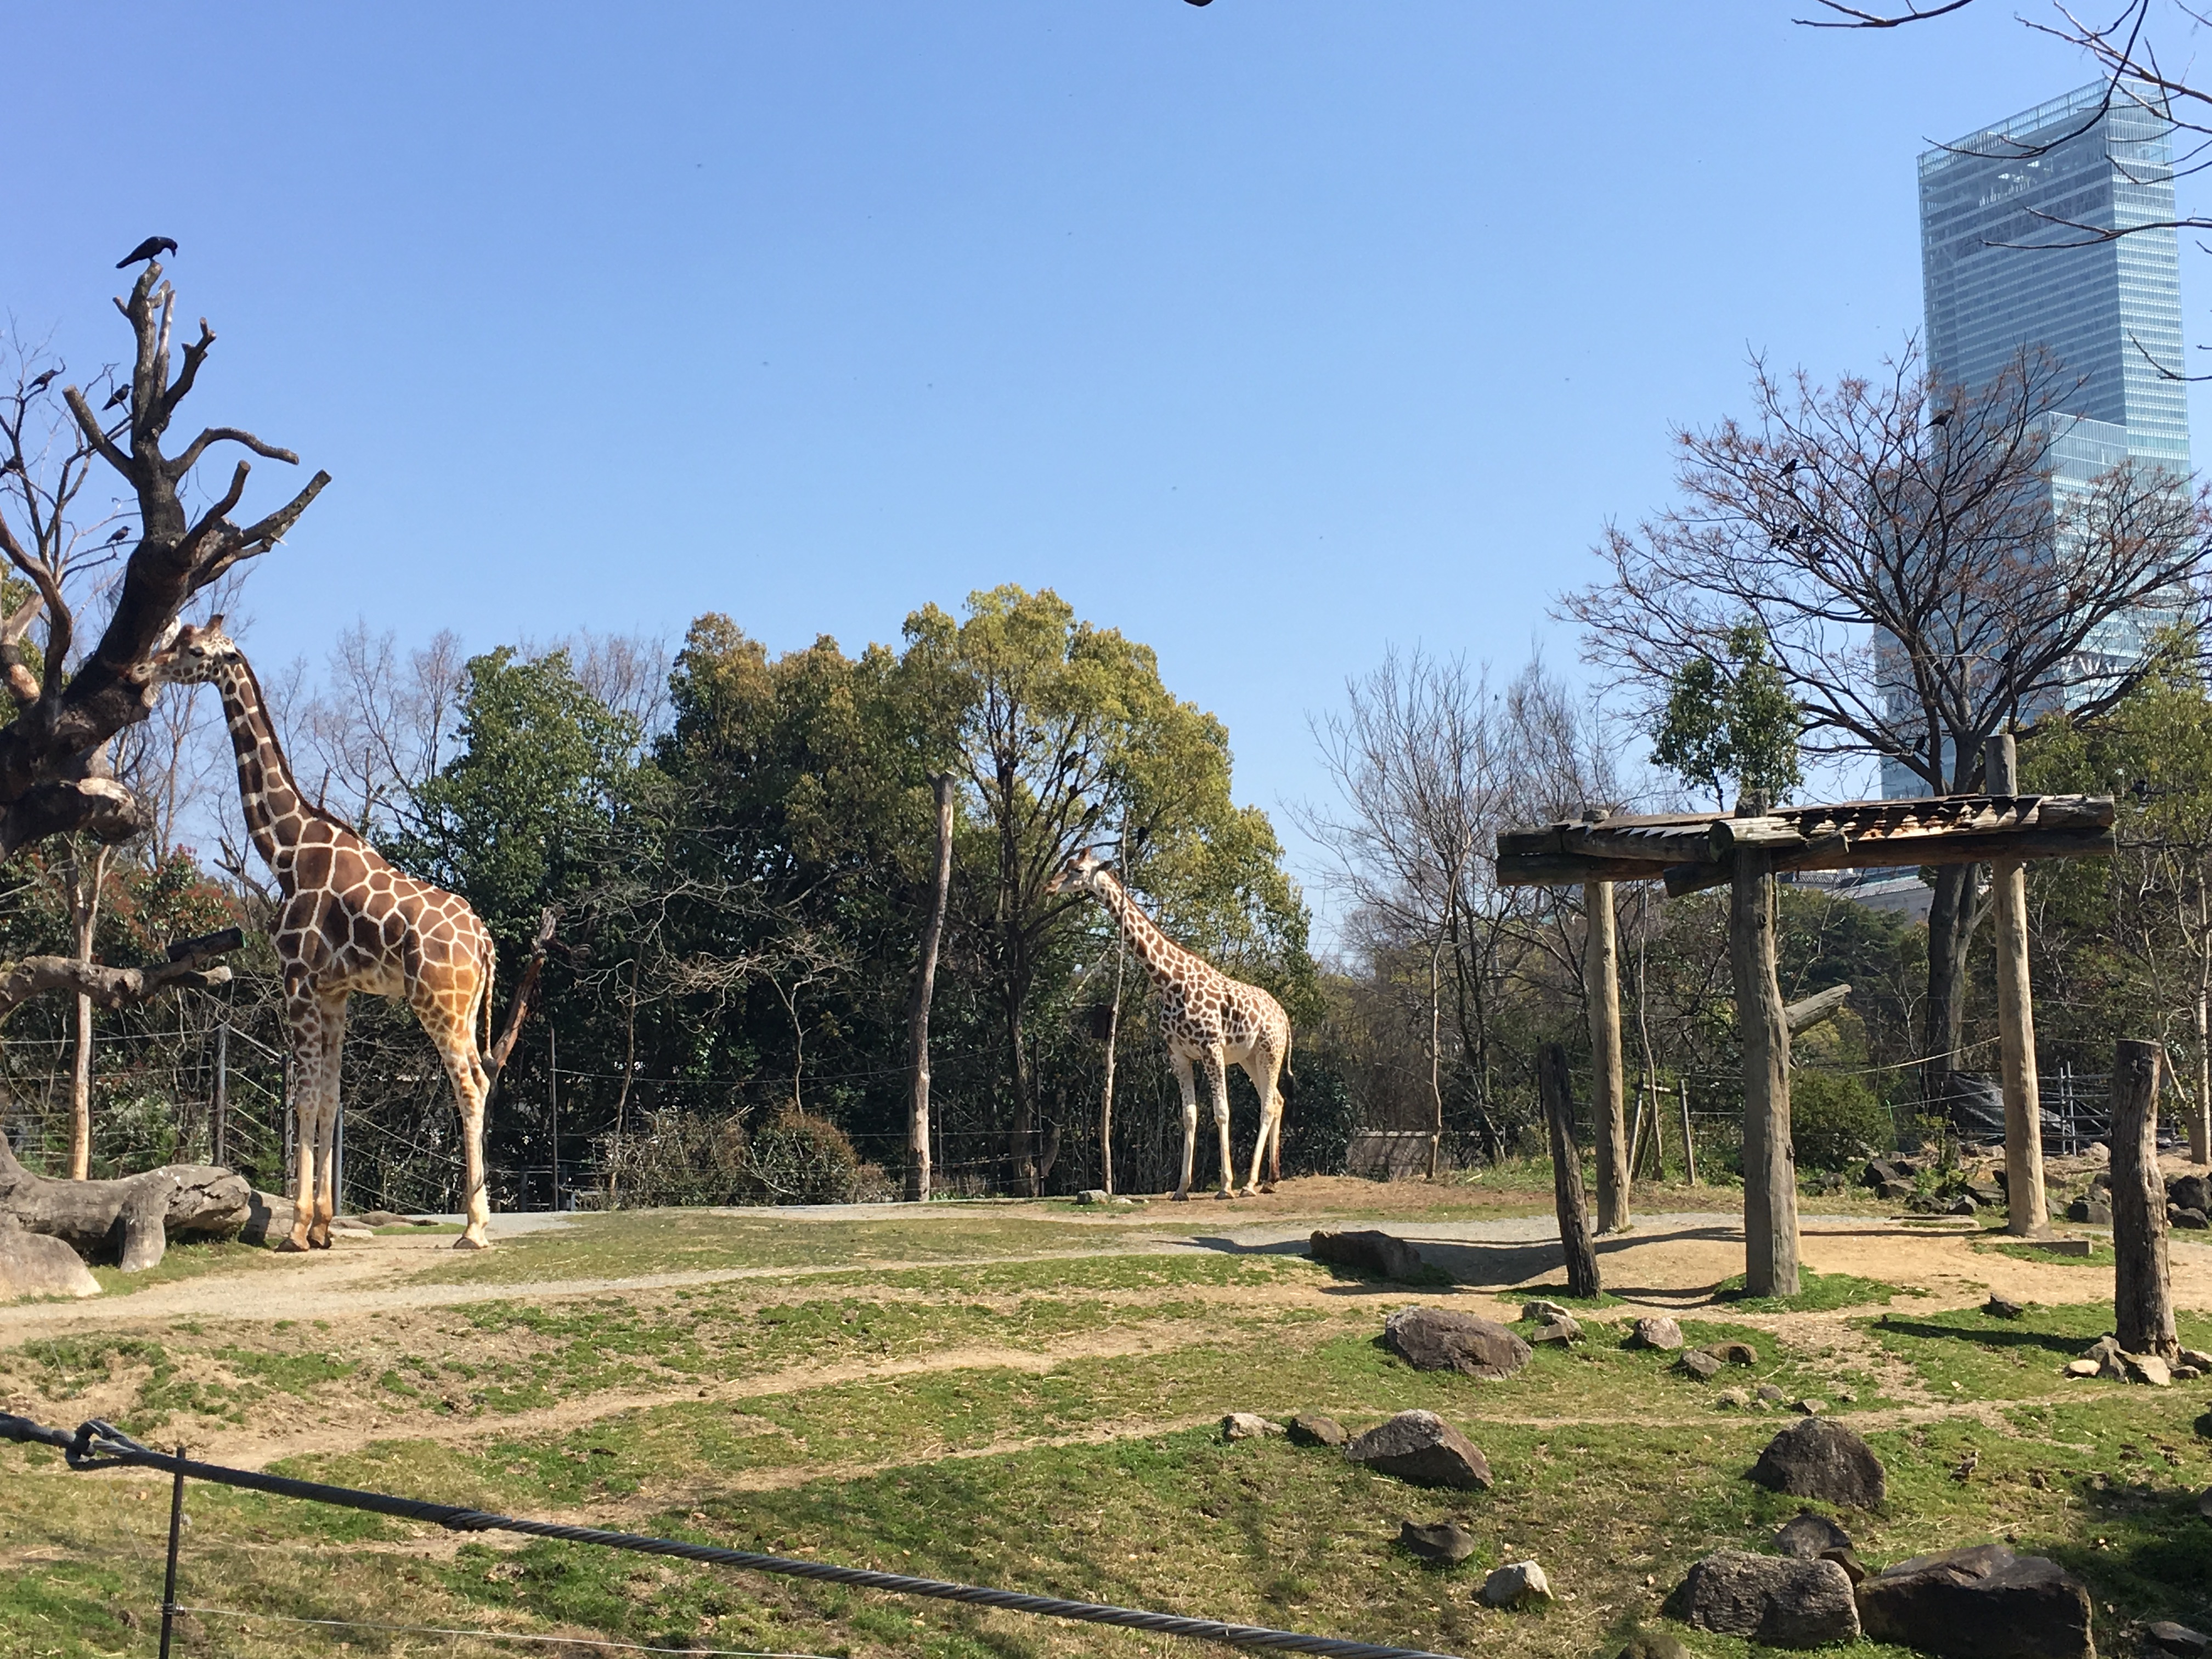 male and female giraffes grazing on trees at Tennoji Zoo Abeno Harukus in background 